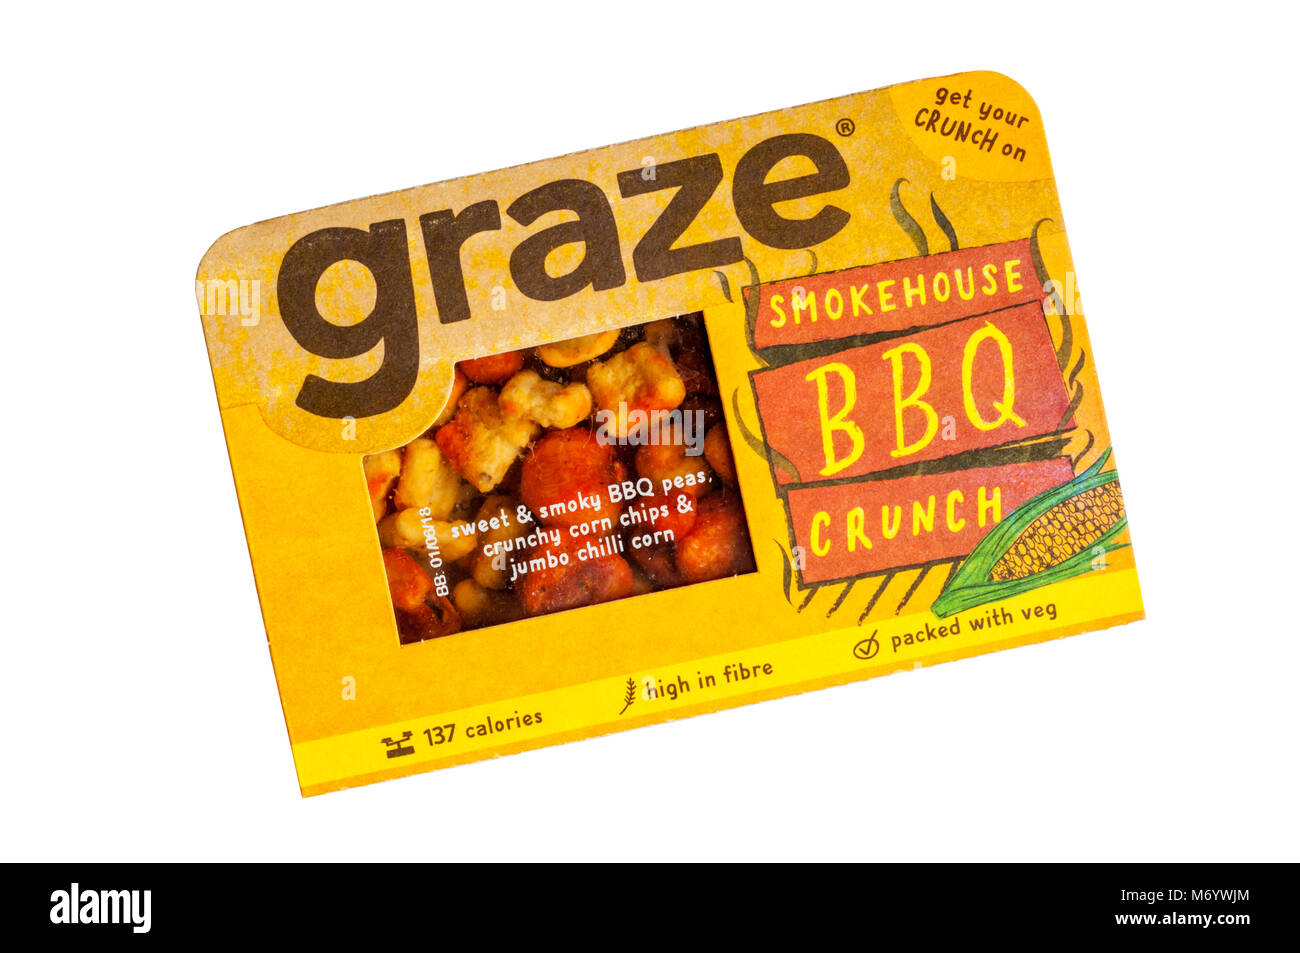 A pack of Graze smokehouse BBQ crunch snacks Stock Photo